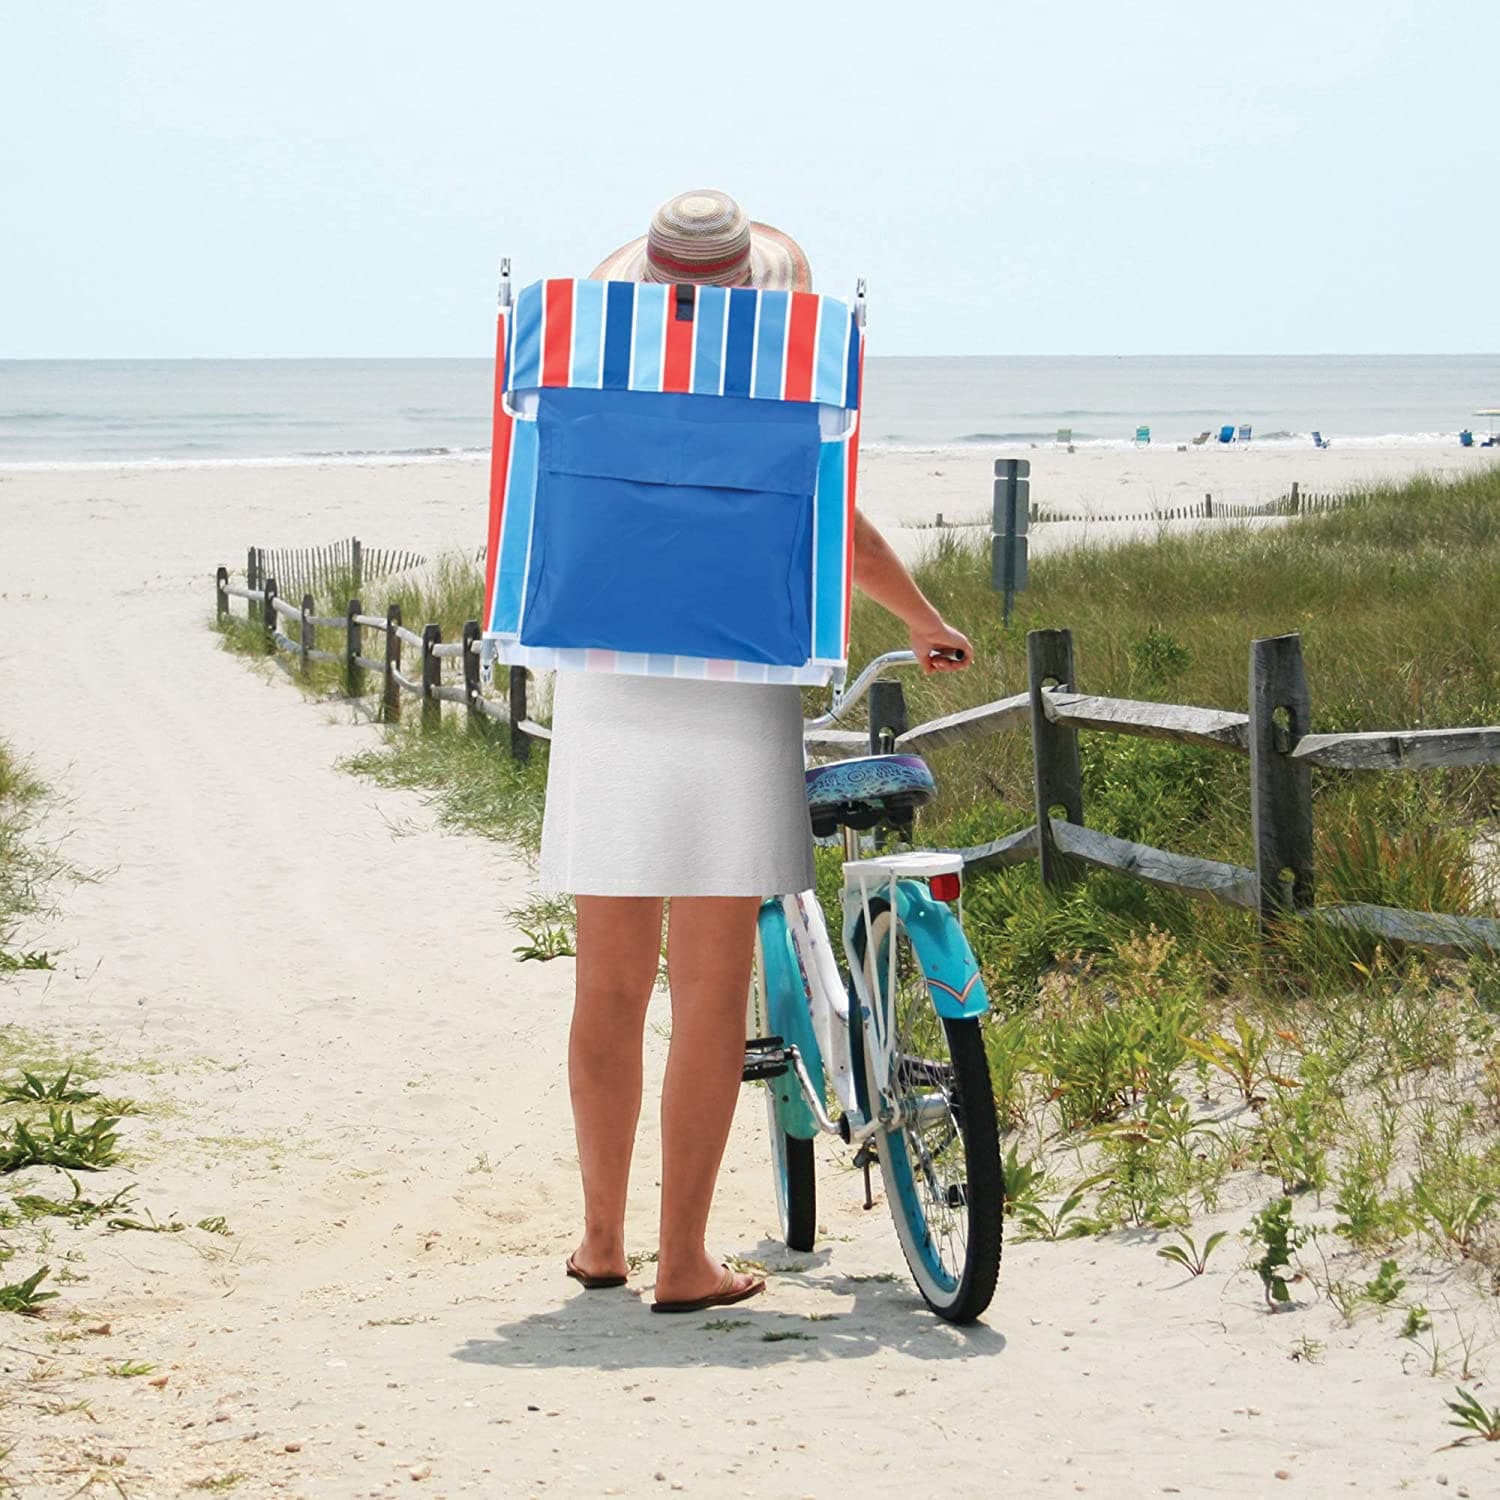 Rio Gear Portable Folding Lay Flat Beach Lounge Chair with Backpack Straps - Senior.com Beach Chairs